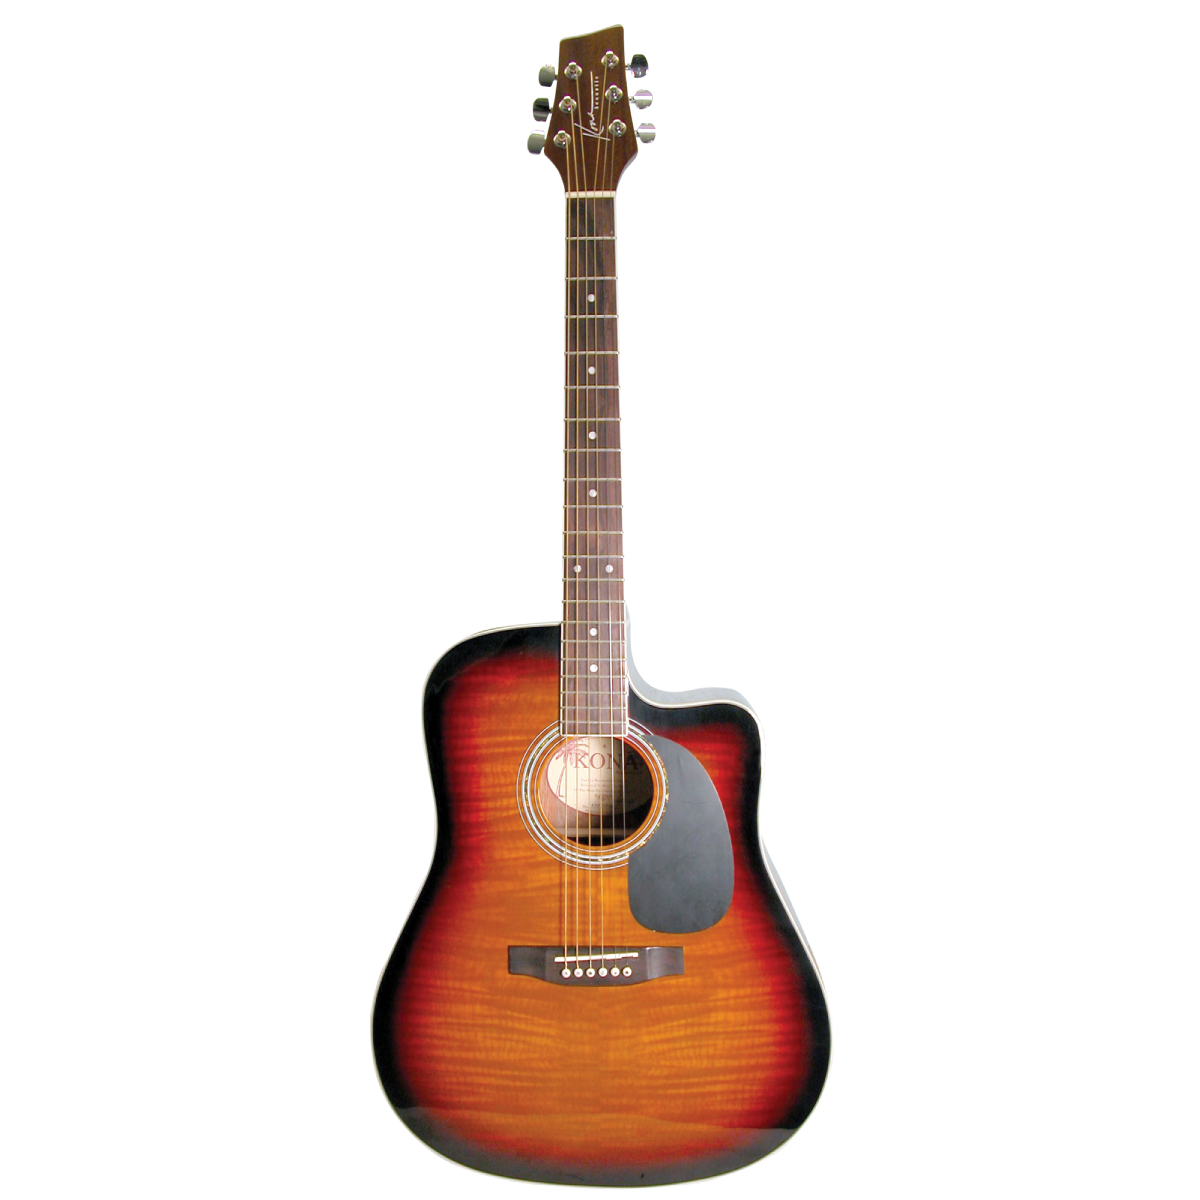 Kona Special Cutaway Electric/Acoustic Guitar in Tobacco Sunburst